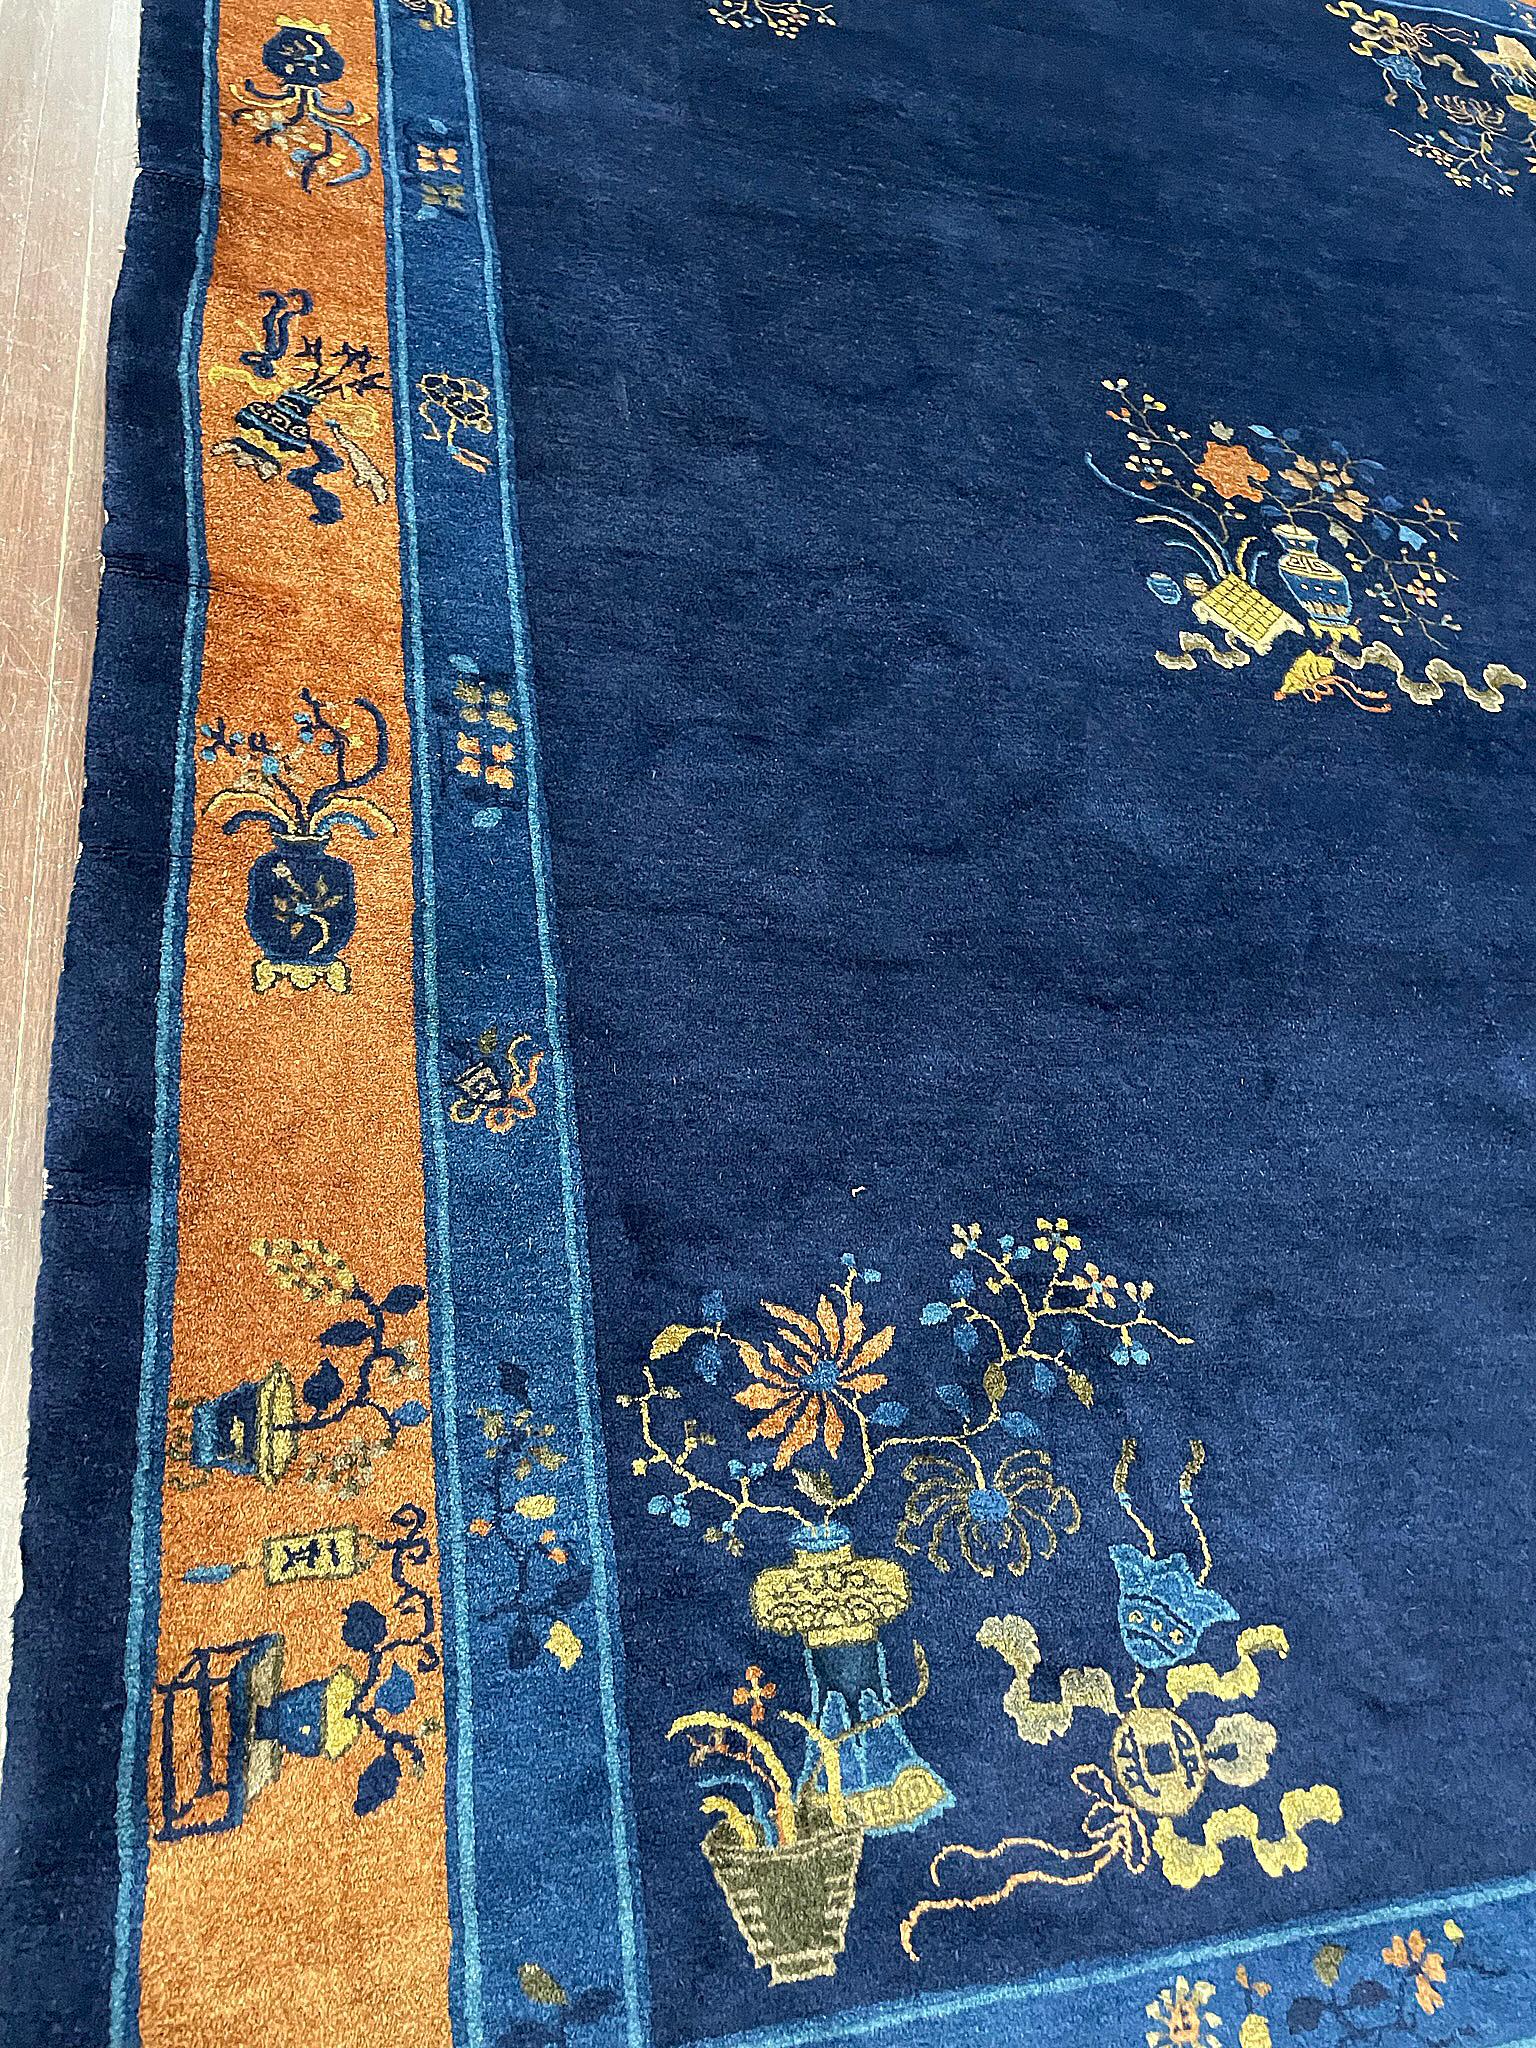 Antique Chinese Peking/Art Deco Carpet, C-1910 For Sale 3